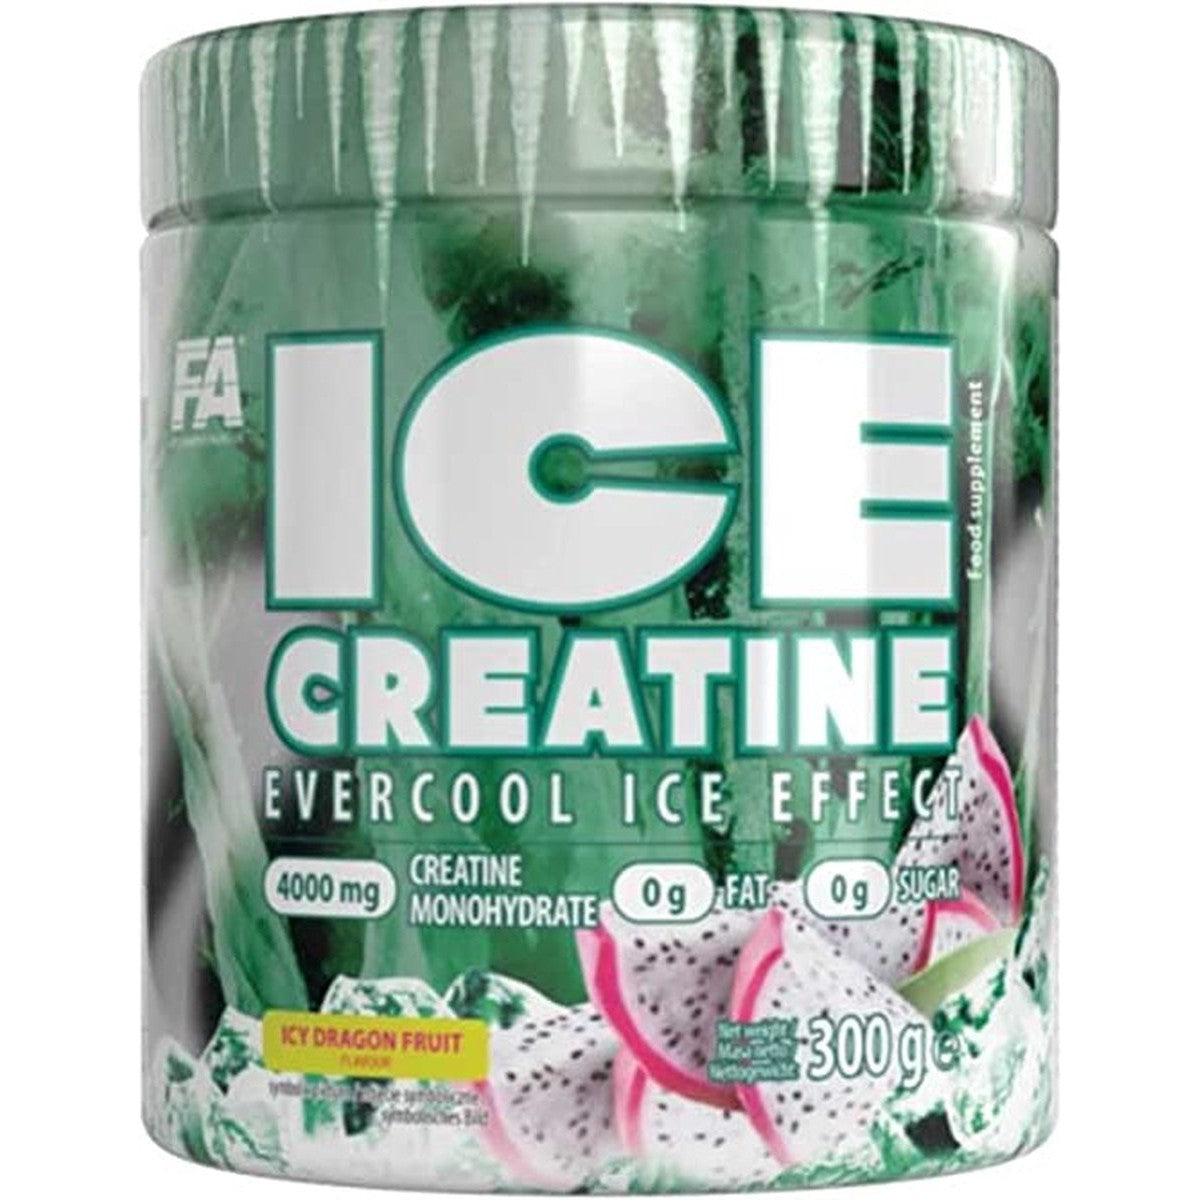 FA Ice Creatine Icy Dragon Fruit 300g